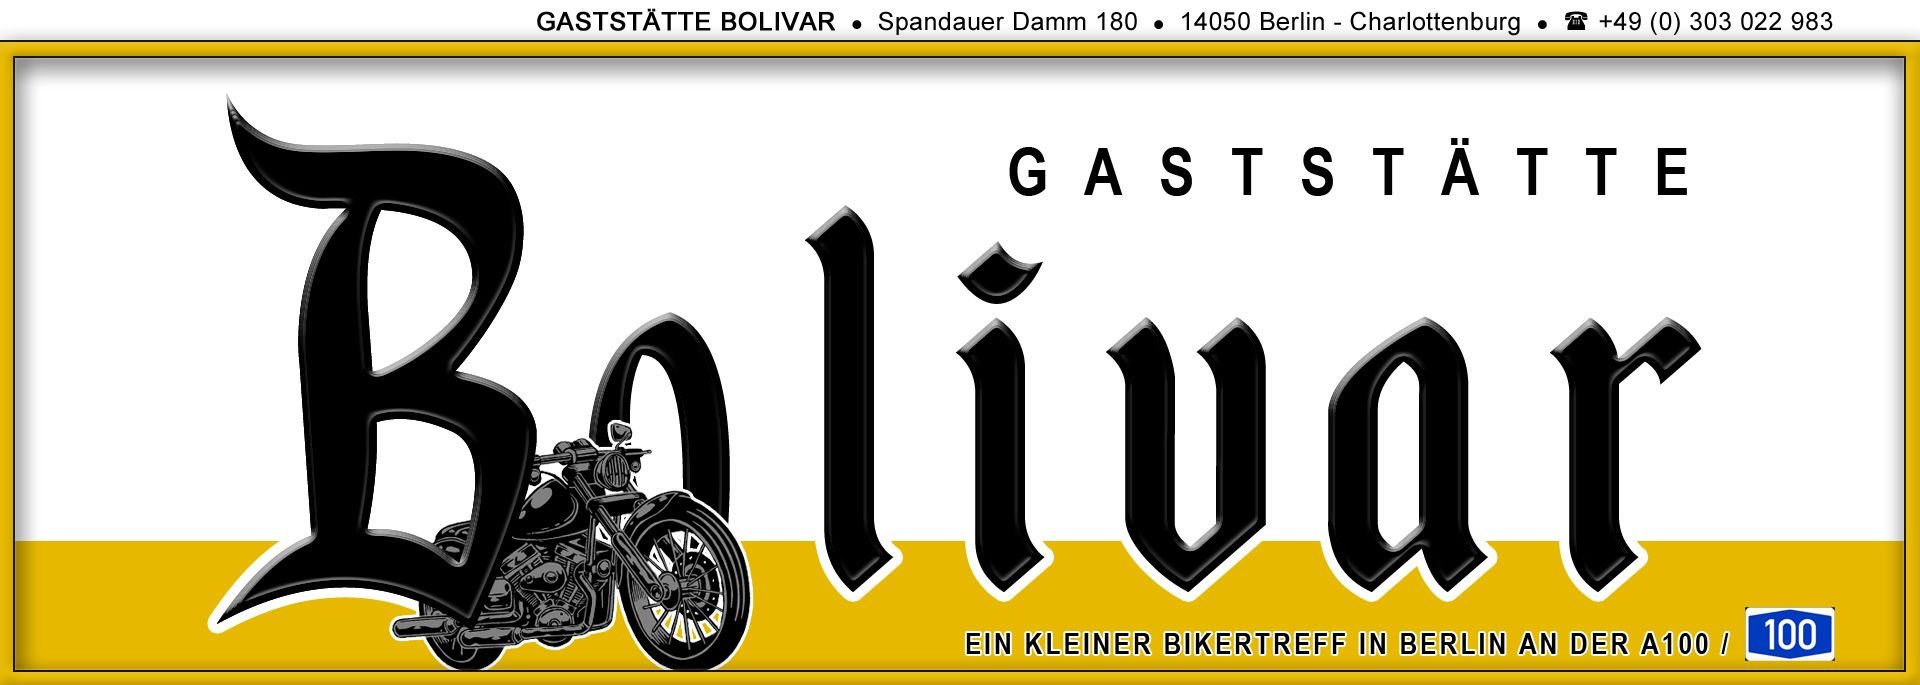 Biker, Bikerin, Treff, Treffpunkt, Trucker, Essen, Trinken, gute Portion, Motorrad, Bike, Berlin